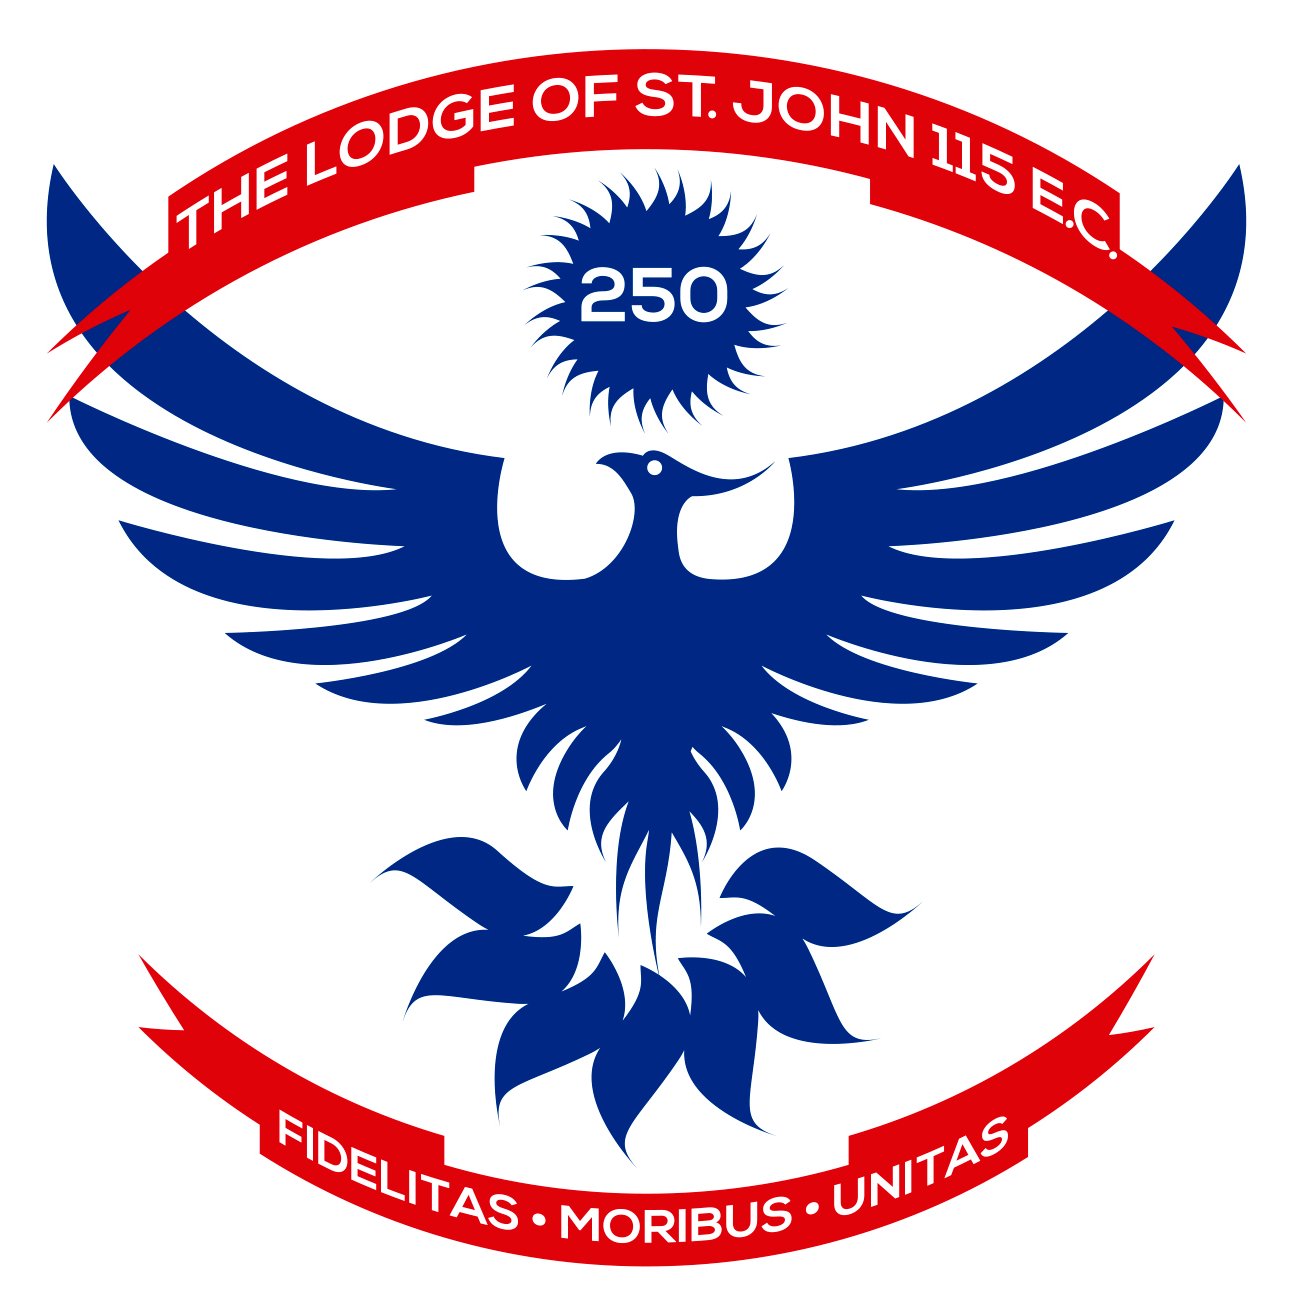 The Lodge of St. John No. 115, founded in 1767, the oldest lodge in Gibraltar.
La logia de San Juan 115, constituida en 1767, la logia mas antigua de Gibraltar.